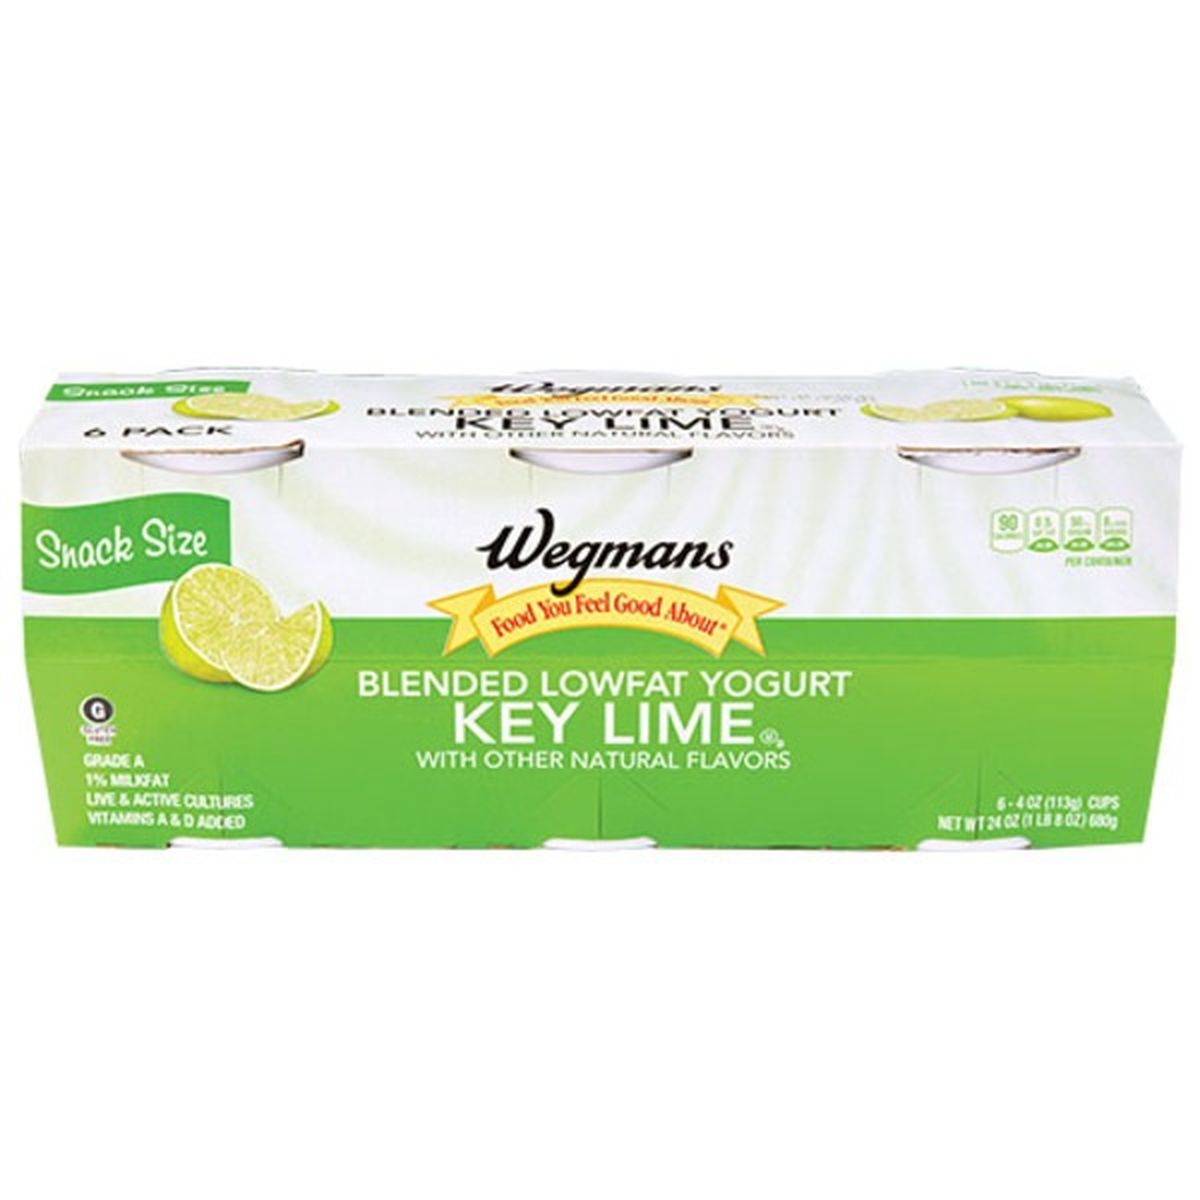 Calories in Wegmans Lowfat Blended Key Lime Yogurt, 6 PACK